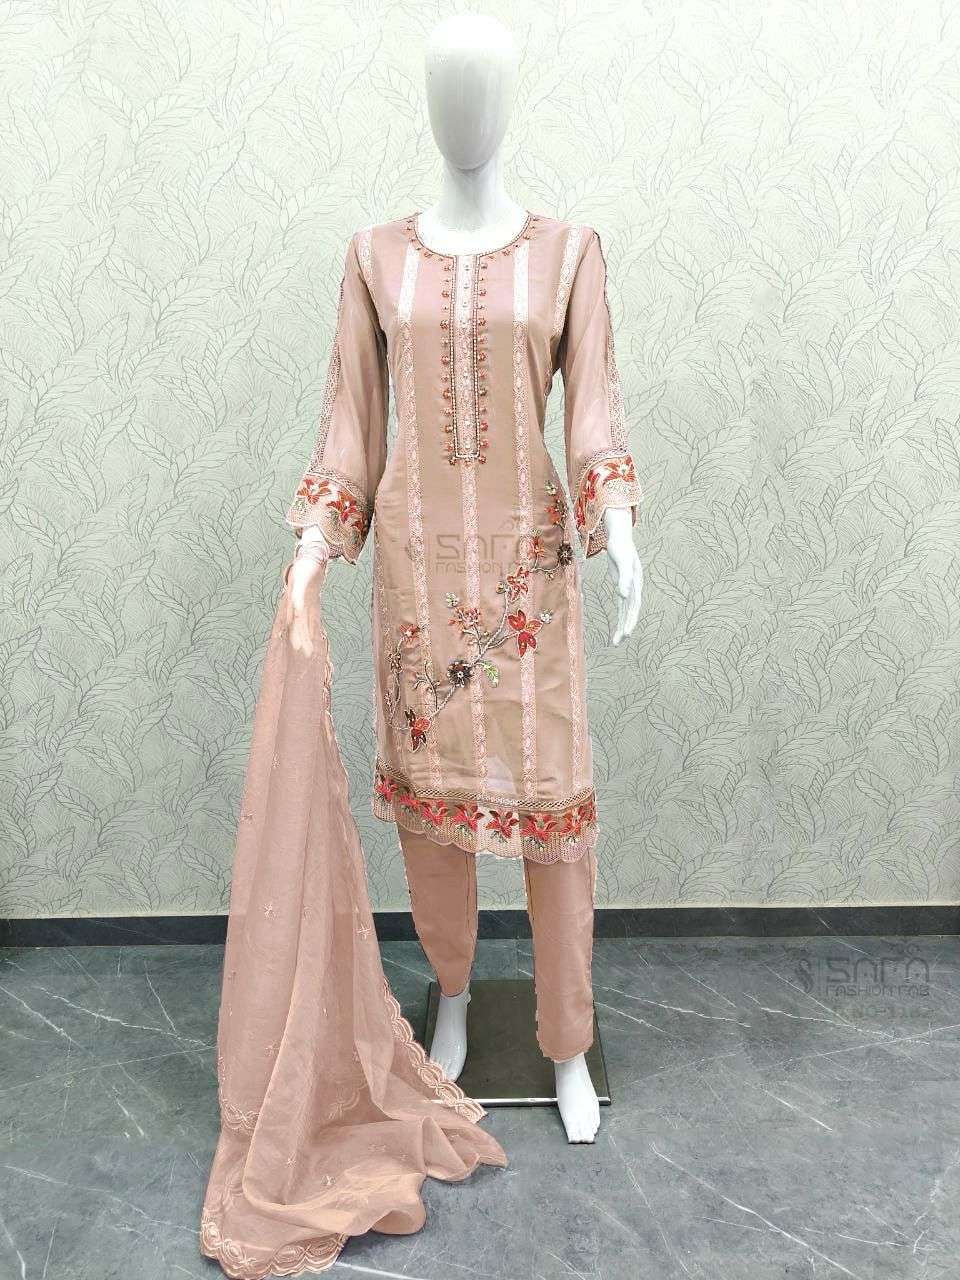 safa fashion hub 1182 colour series latest designer pakistani salwar kameez wholesaler surat gujarat